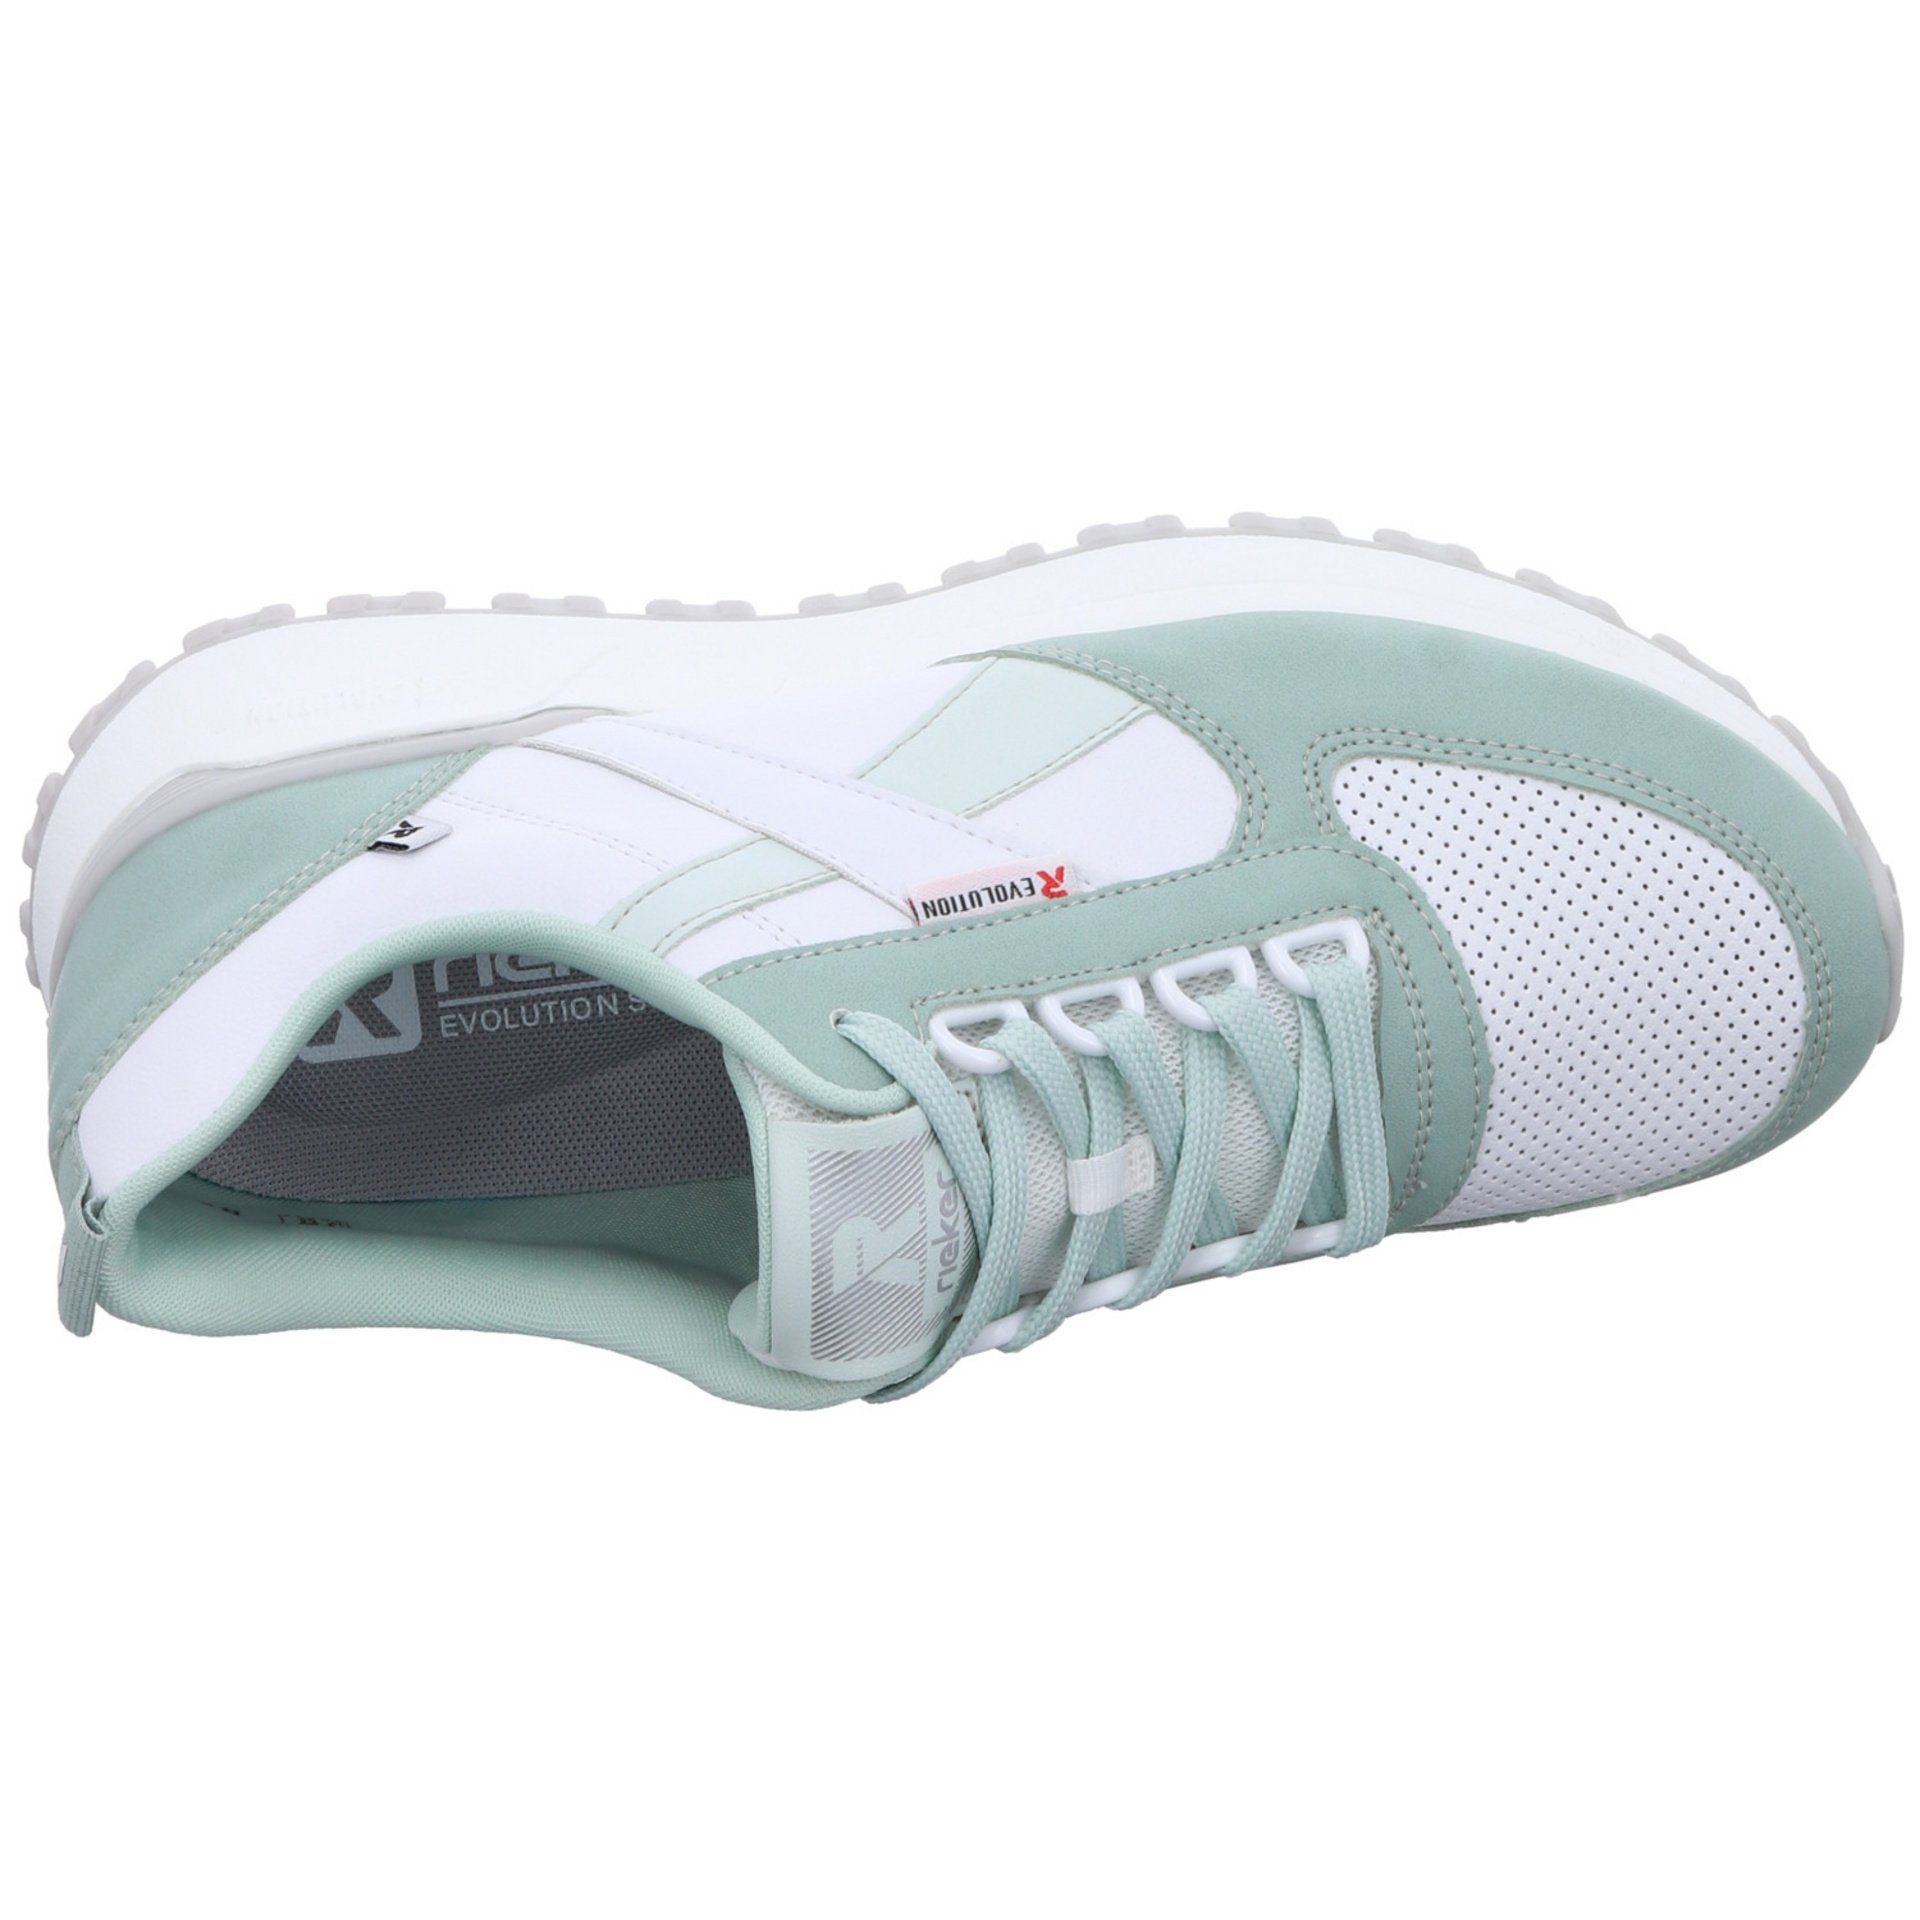 Rieker Damen Sneaker Schuhe Sneaker Leder-/Textilkombination Sneaker peppermint/sportweiss/weiss/pa R-Evolution